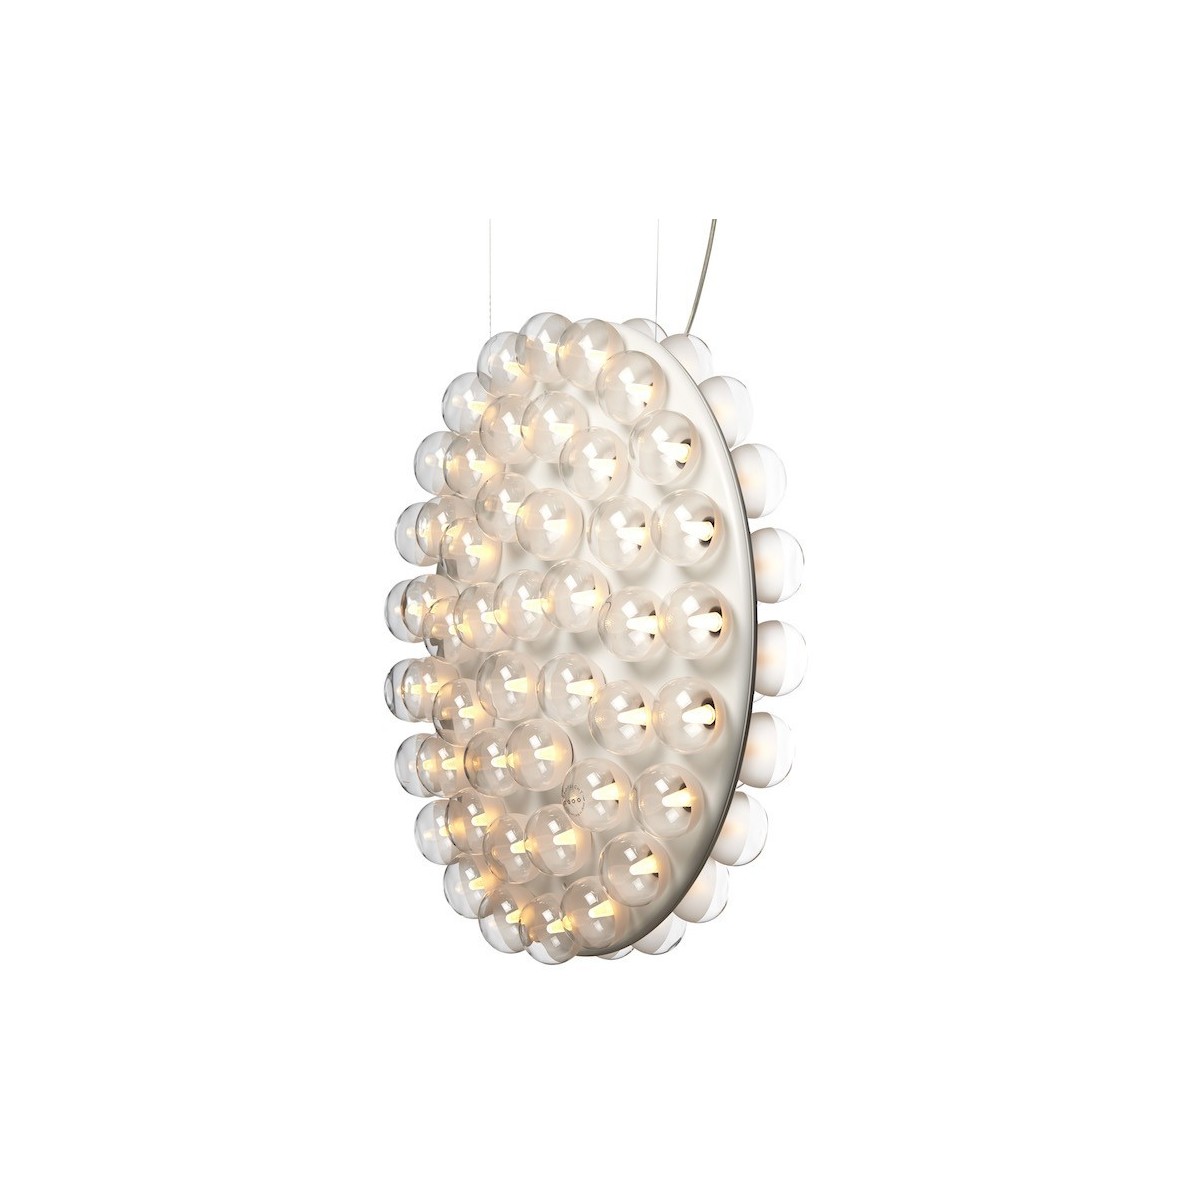 2700K (warm white light) - Prop Light Round Double Vertical pendant